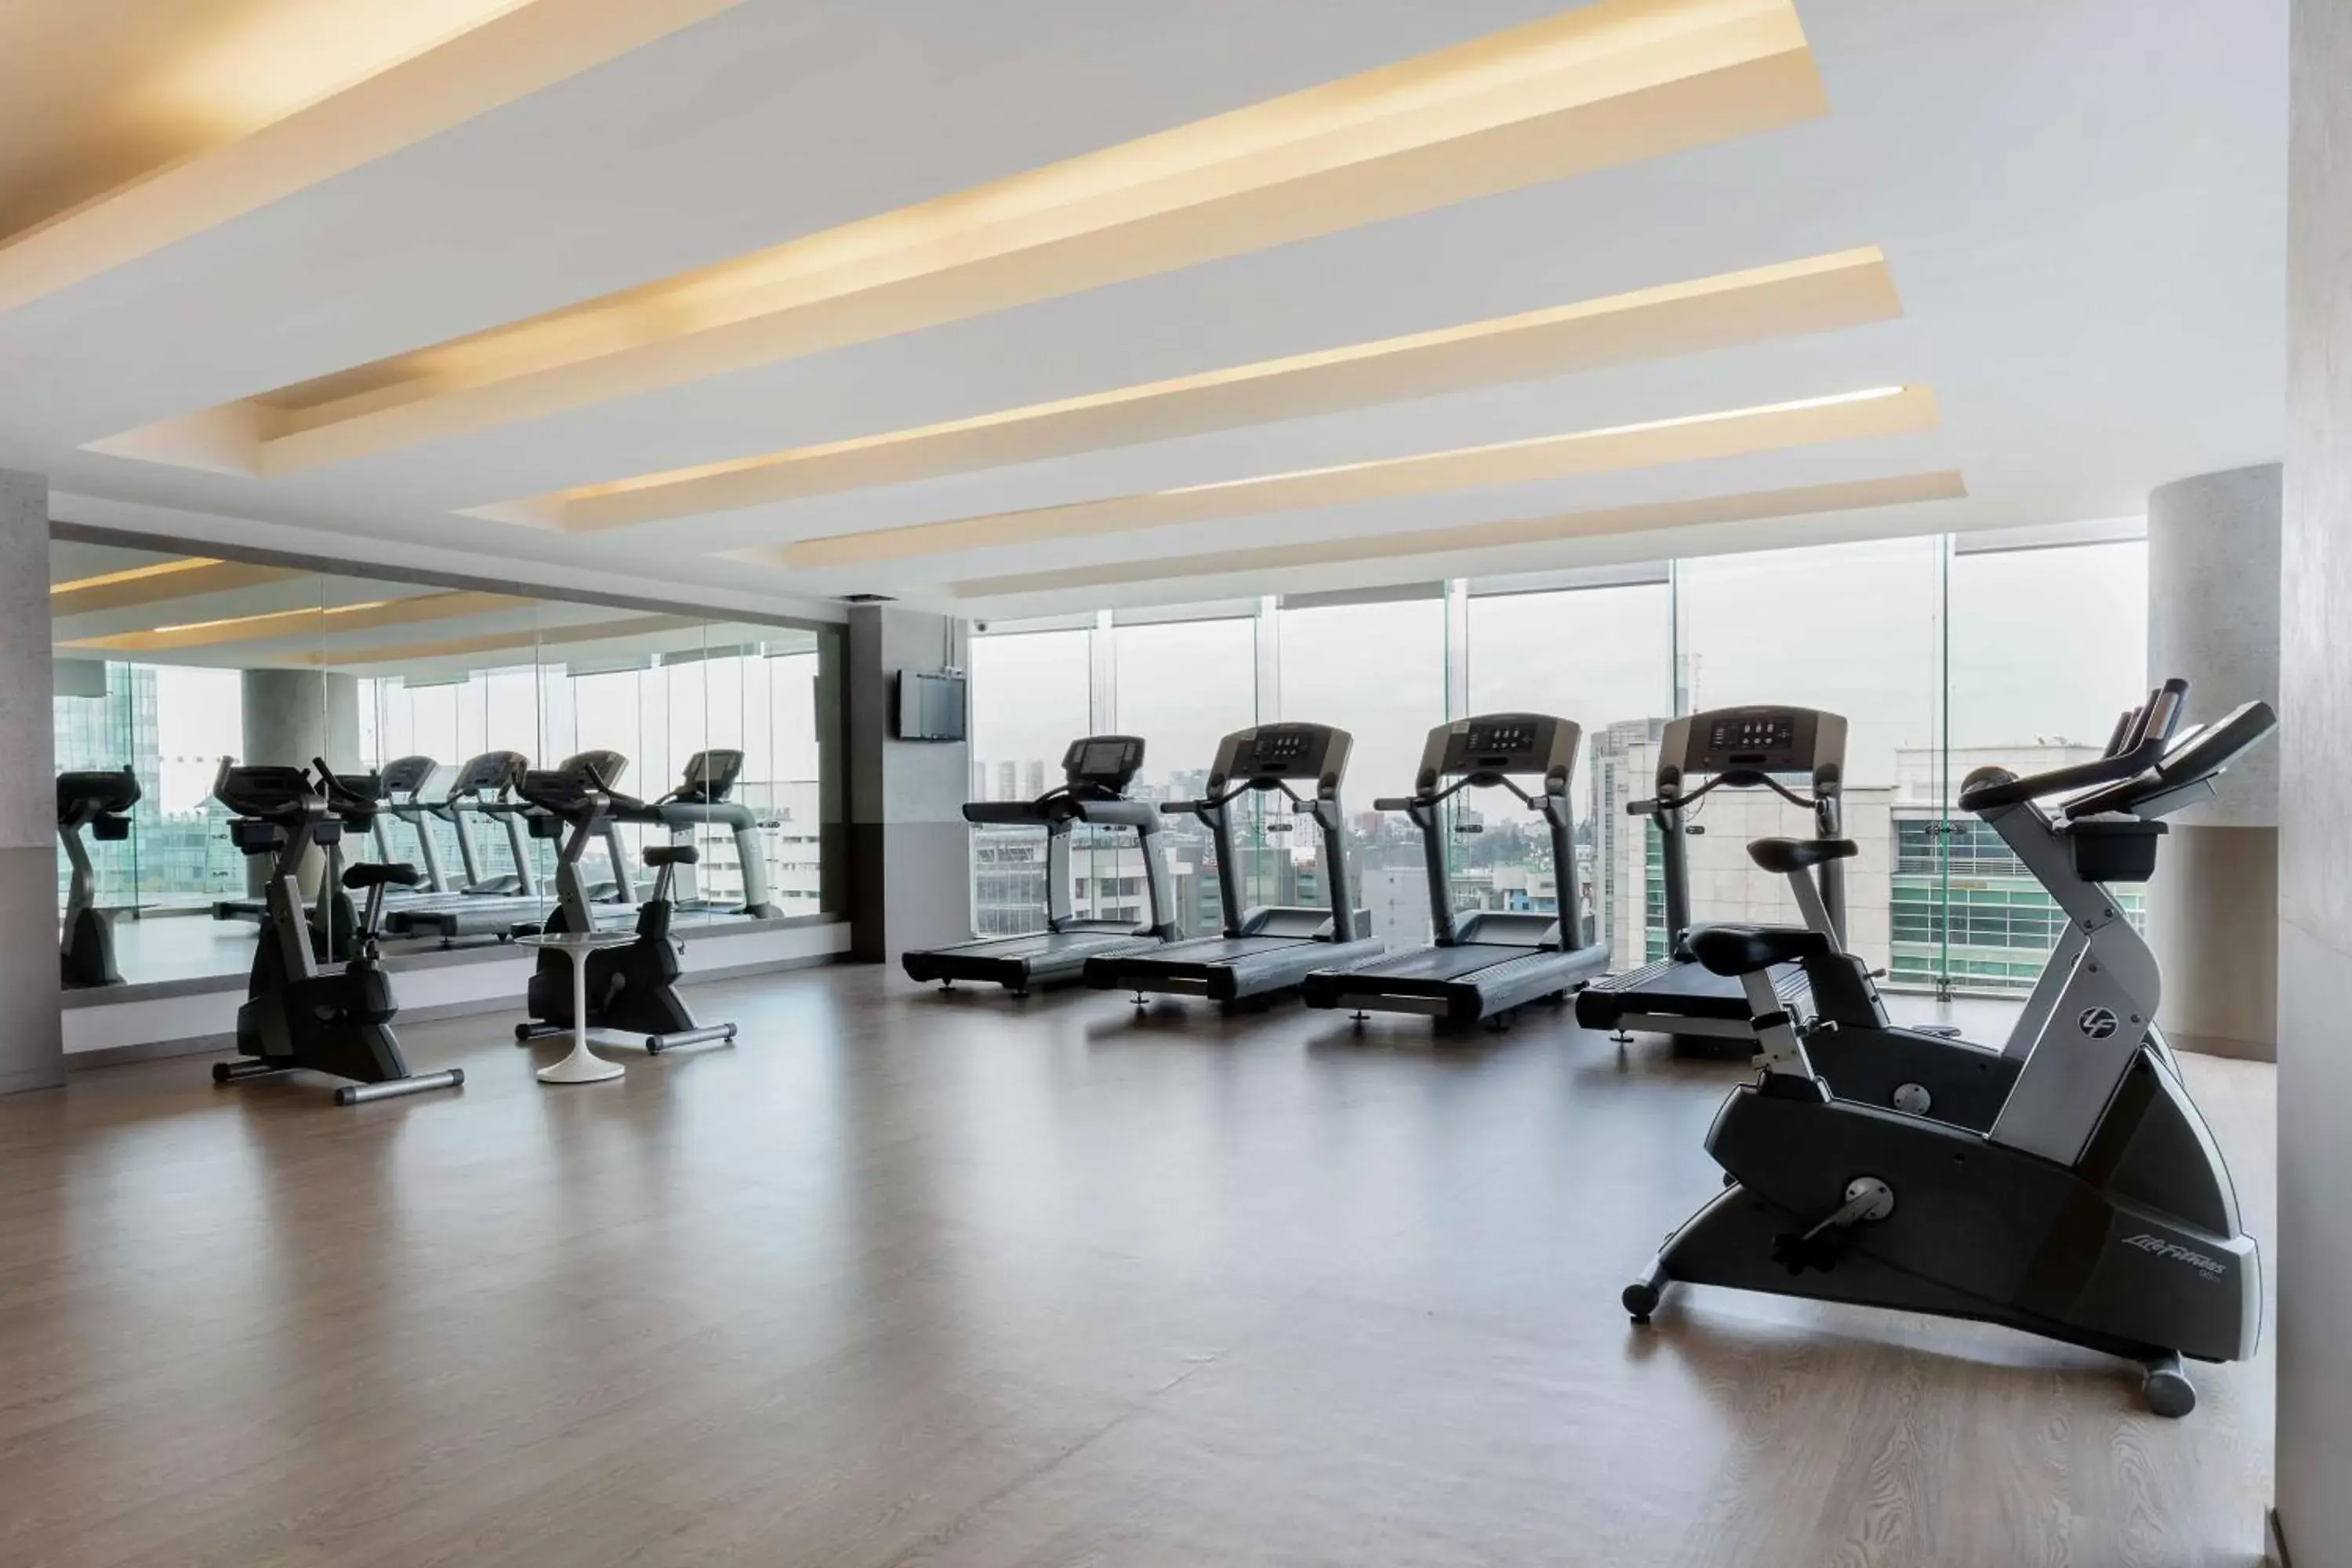 Fitness centre/facilities, Fitness Center/Facilities in Doubletree By Hilton Mexico City Santa Fe